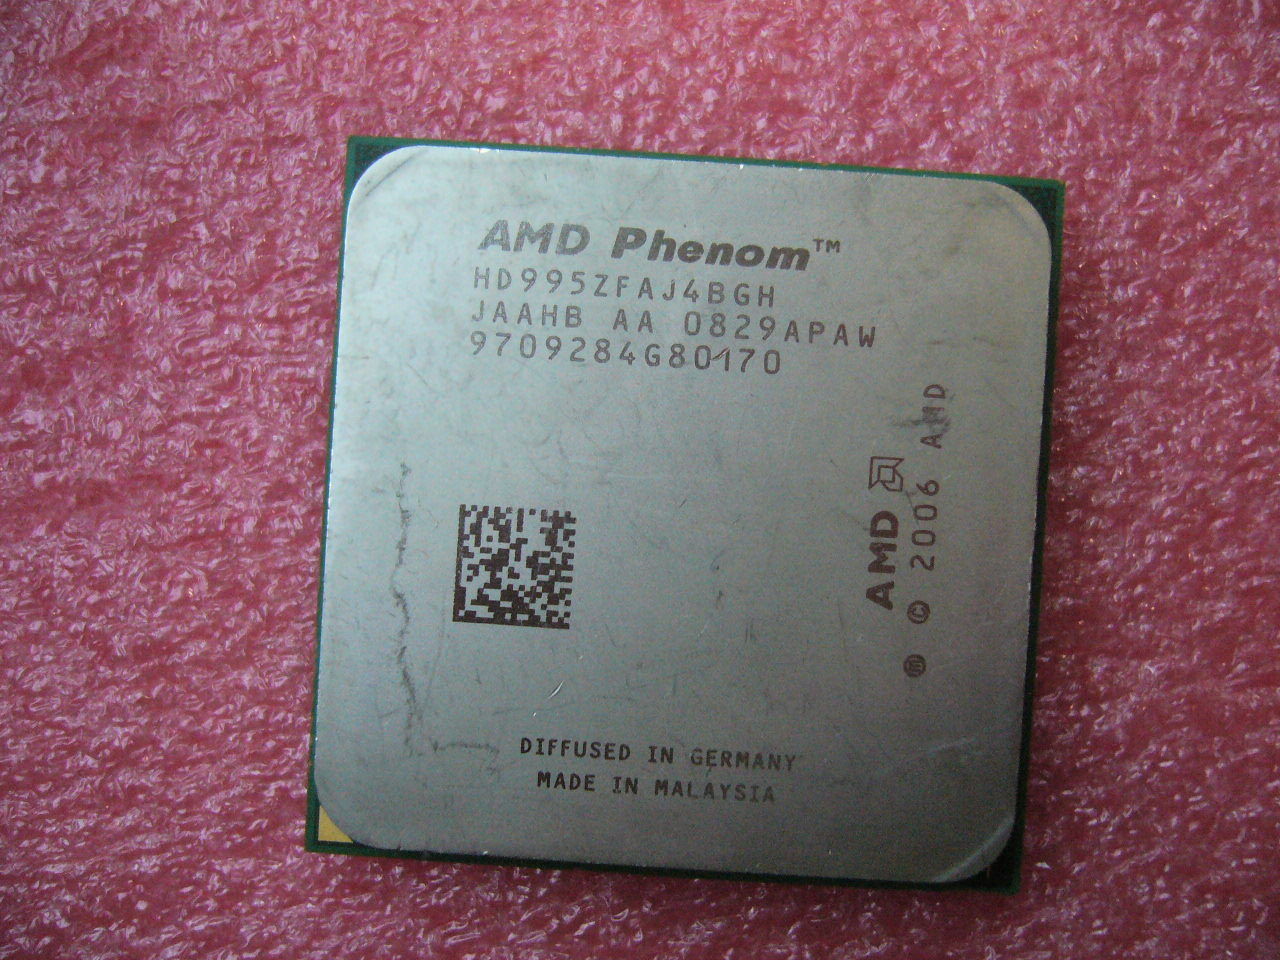 QTY 1x AMD Phenom X4 9950 2.6 GHz Quad-Core (HD995ZFAJ4BGH) CPU Socket AM2+